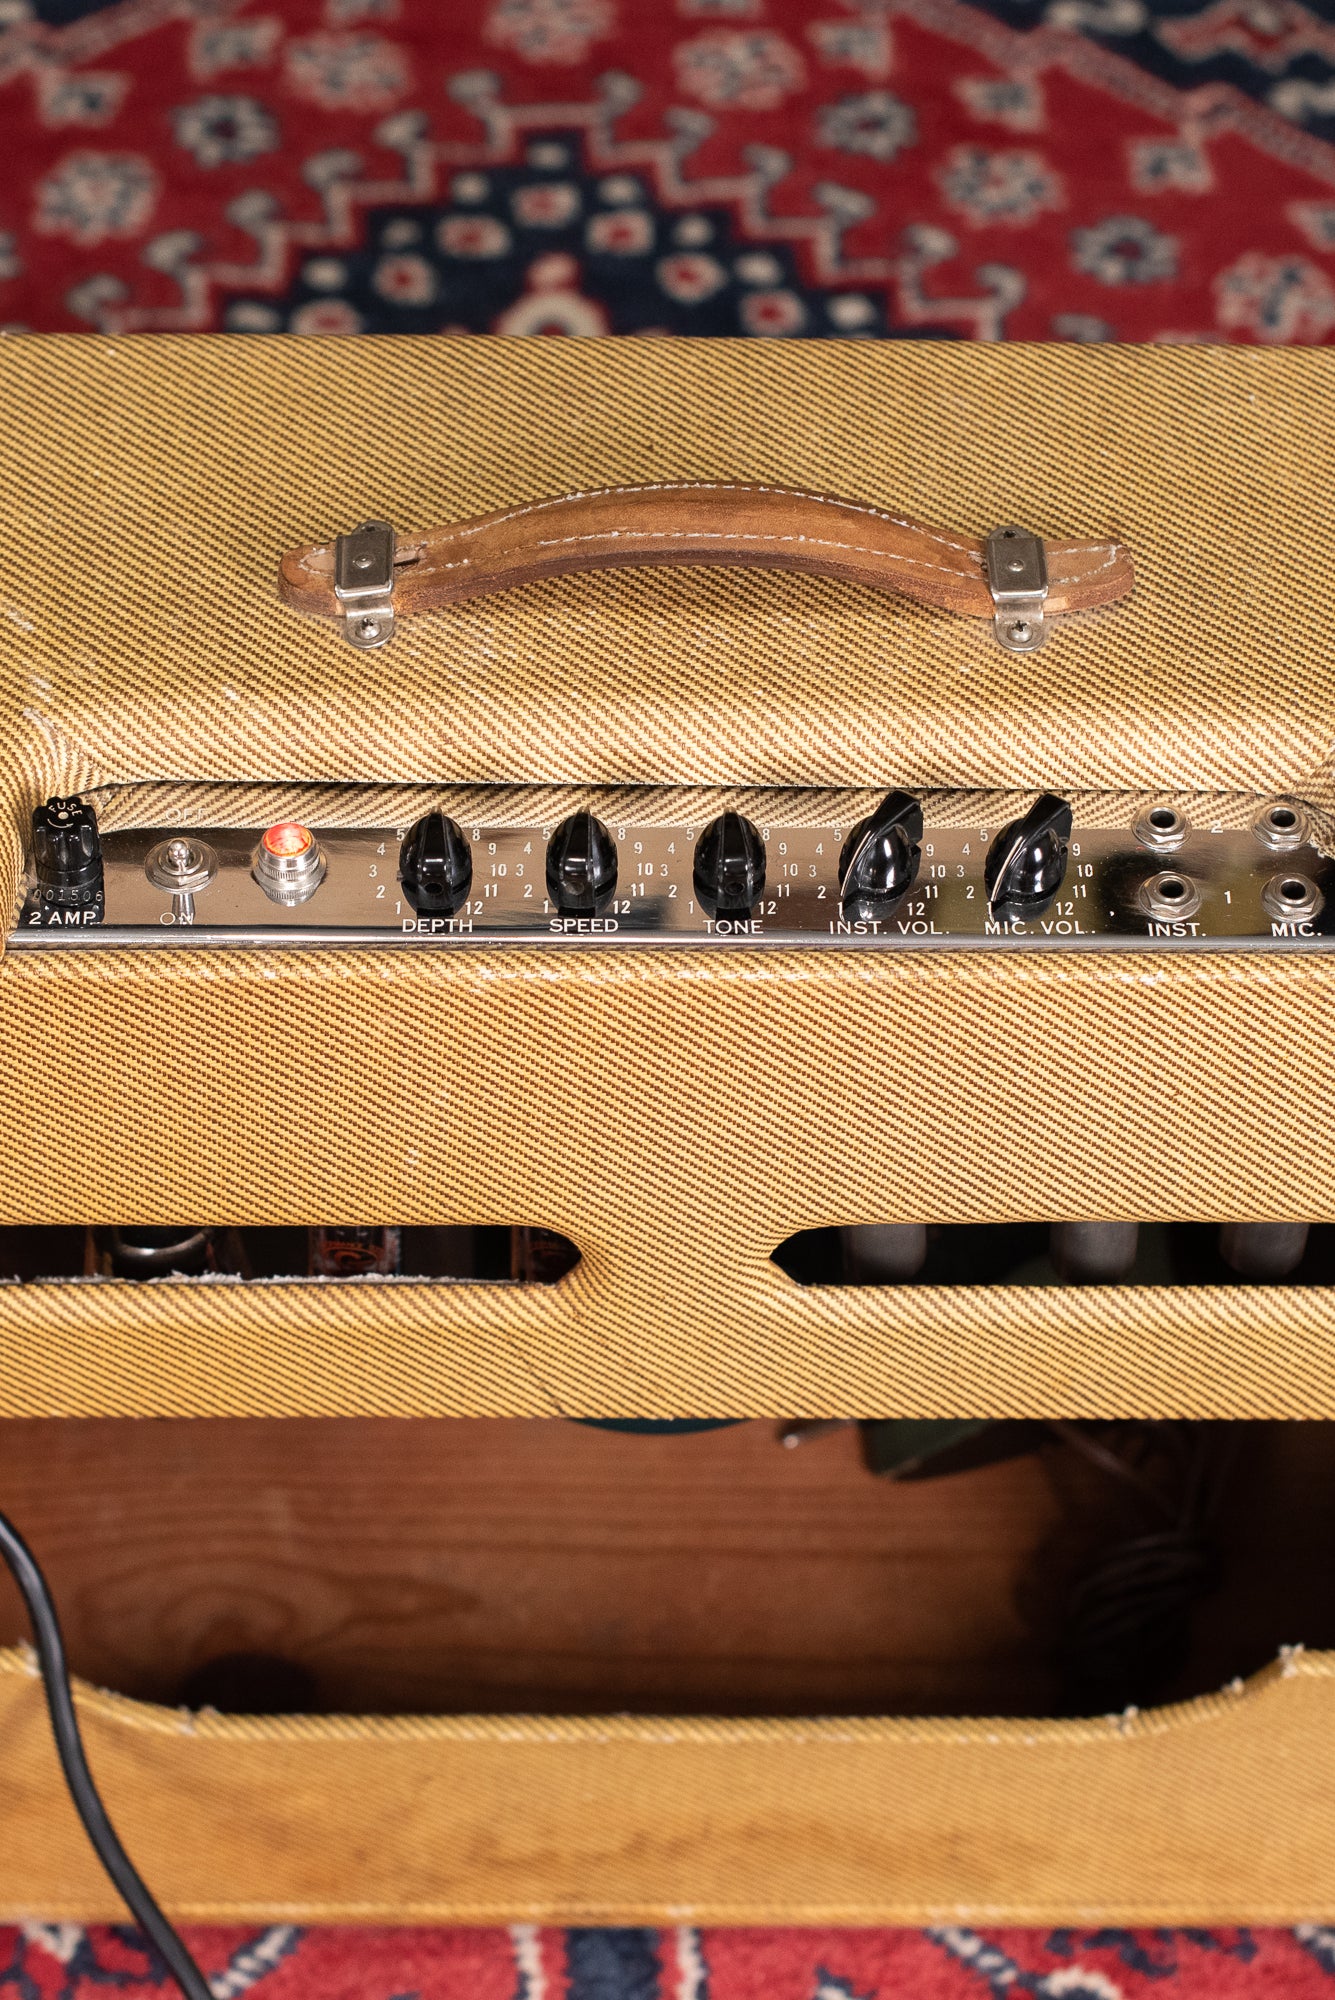 Tweed Fender amplifier